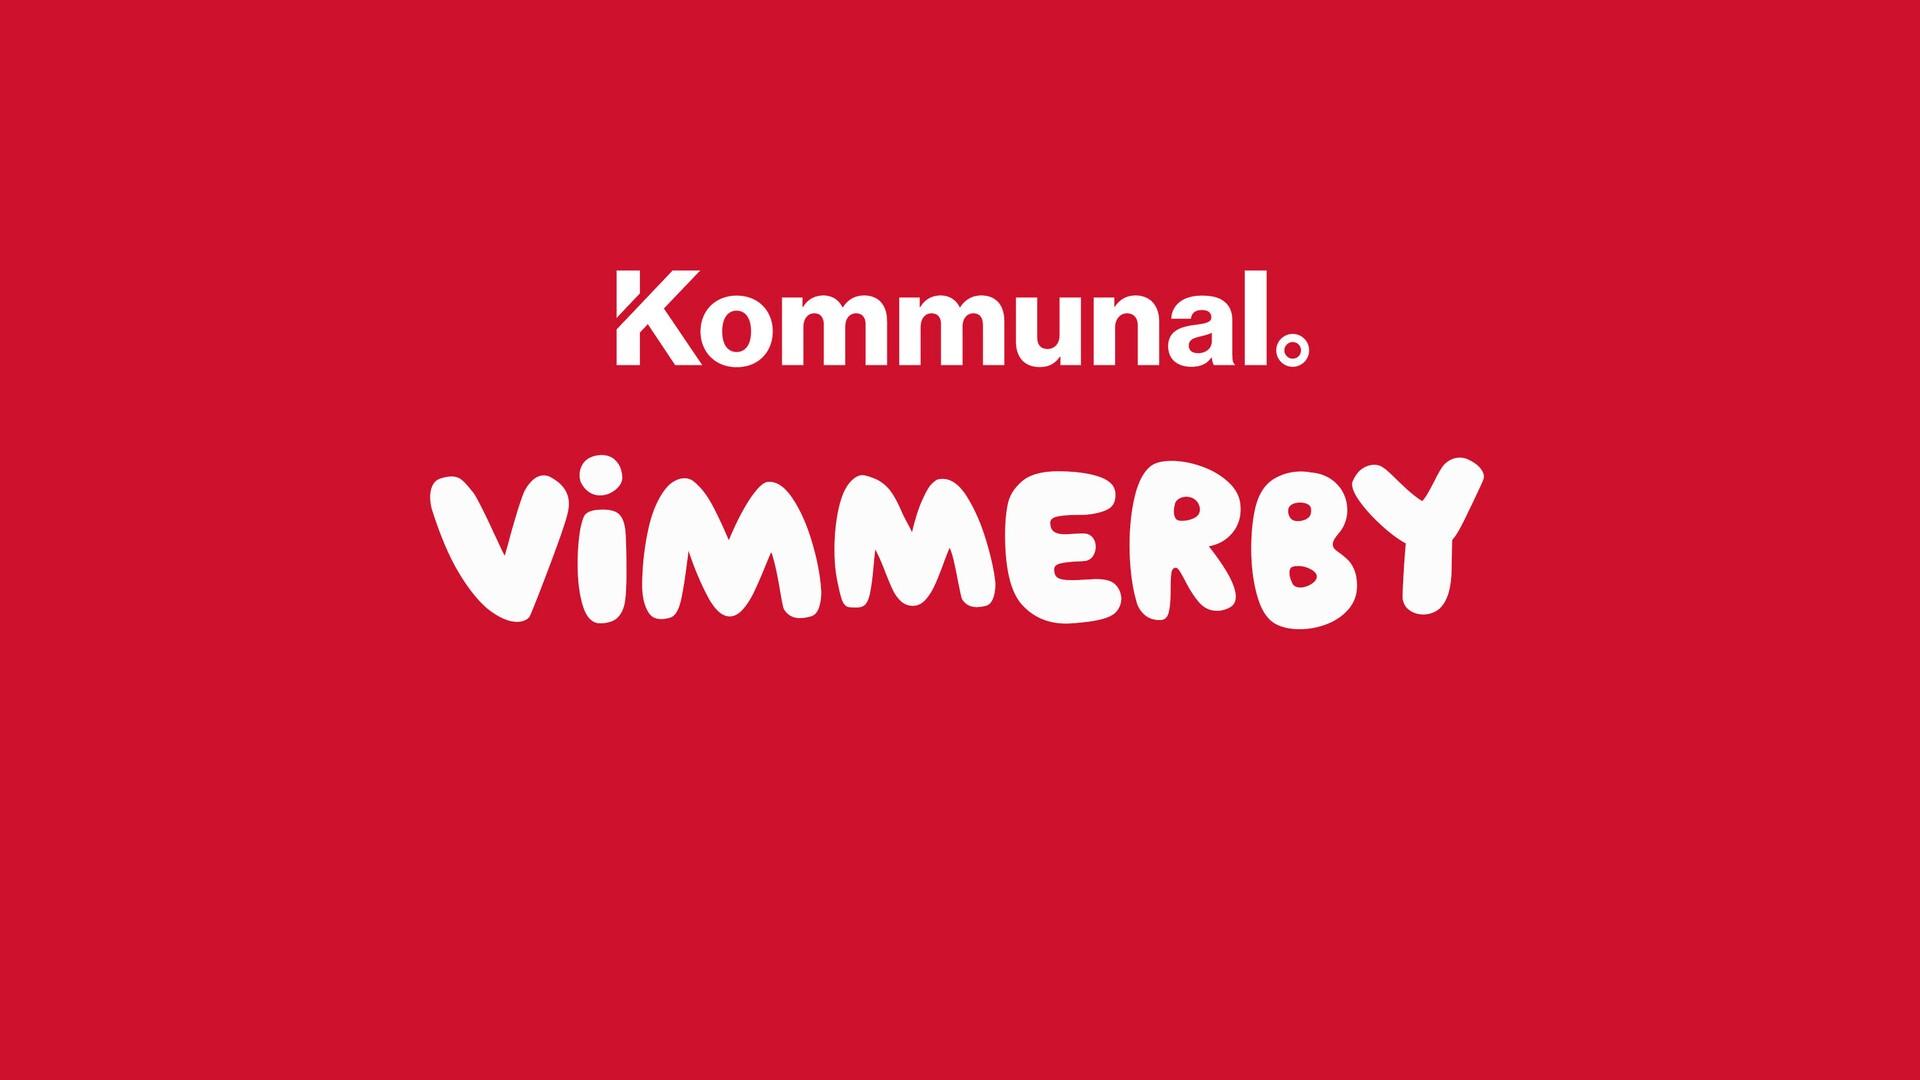 Kommunal Vimmerby